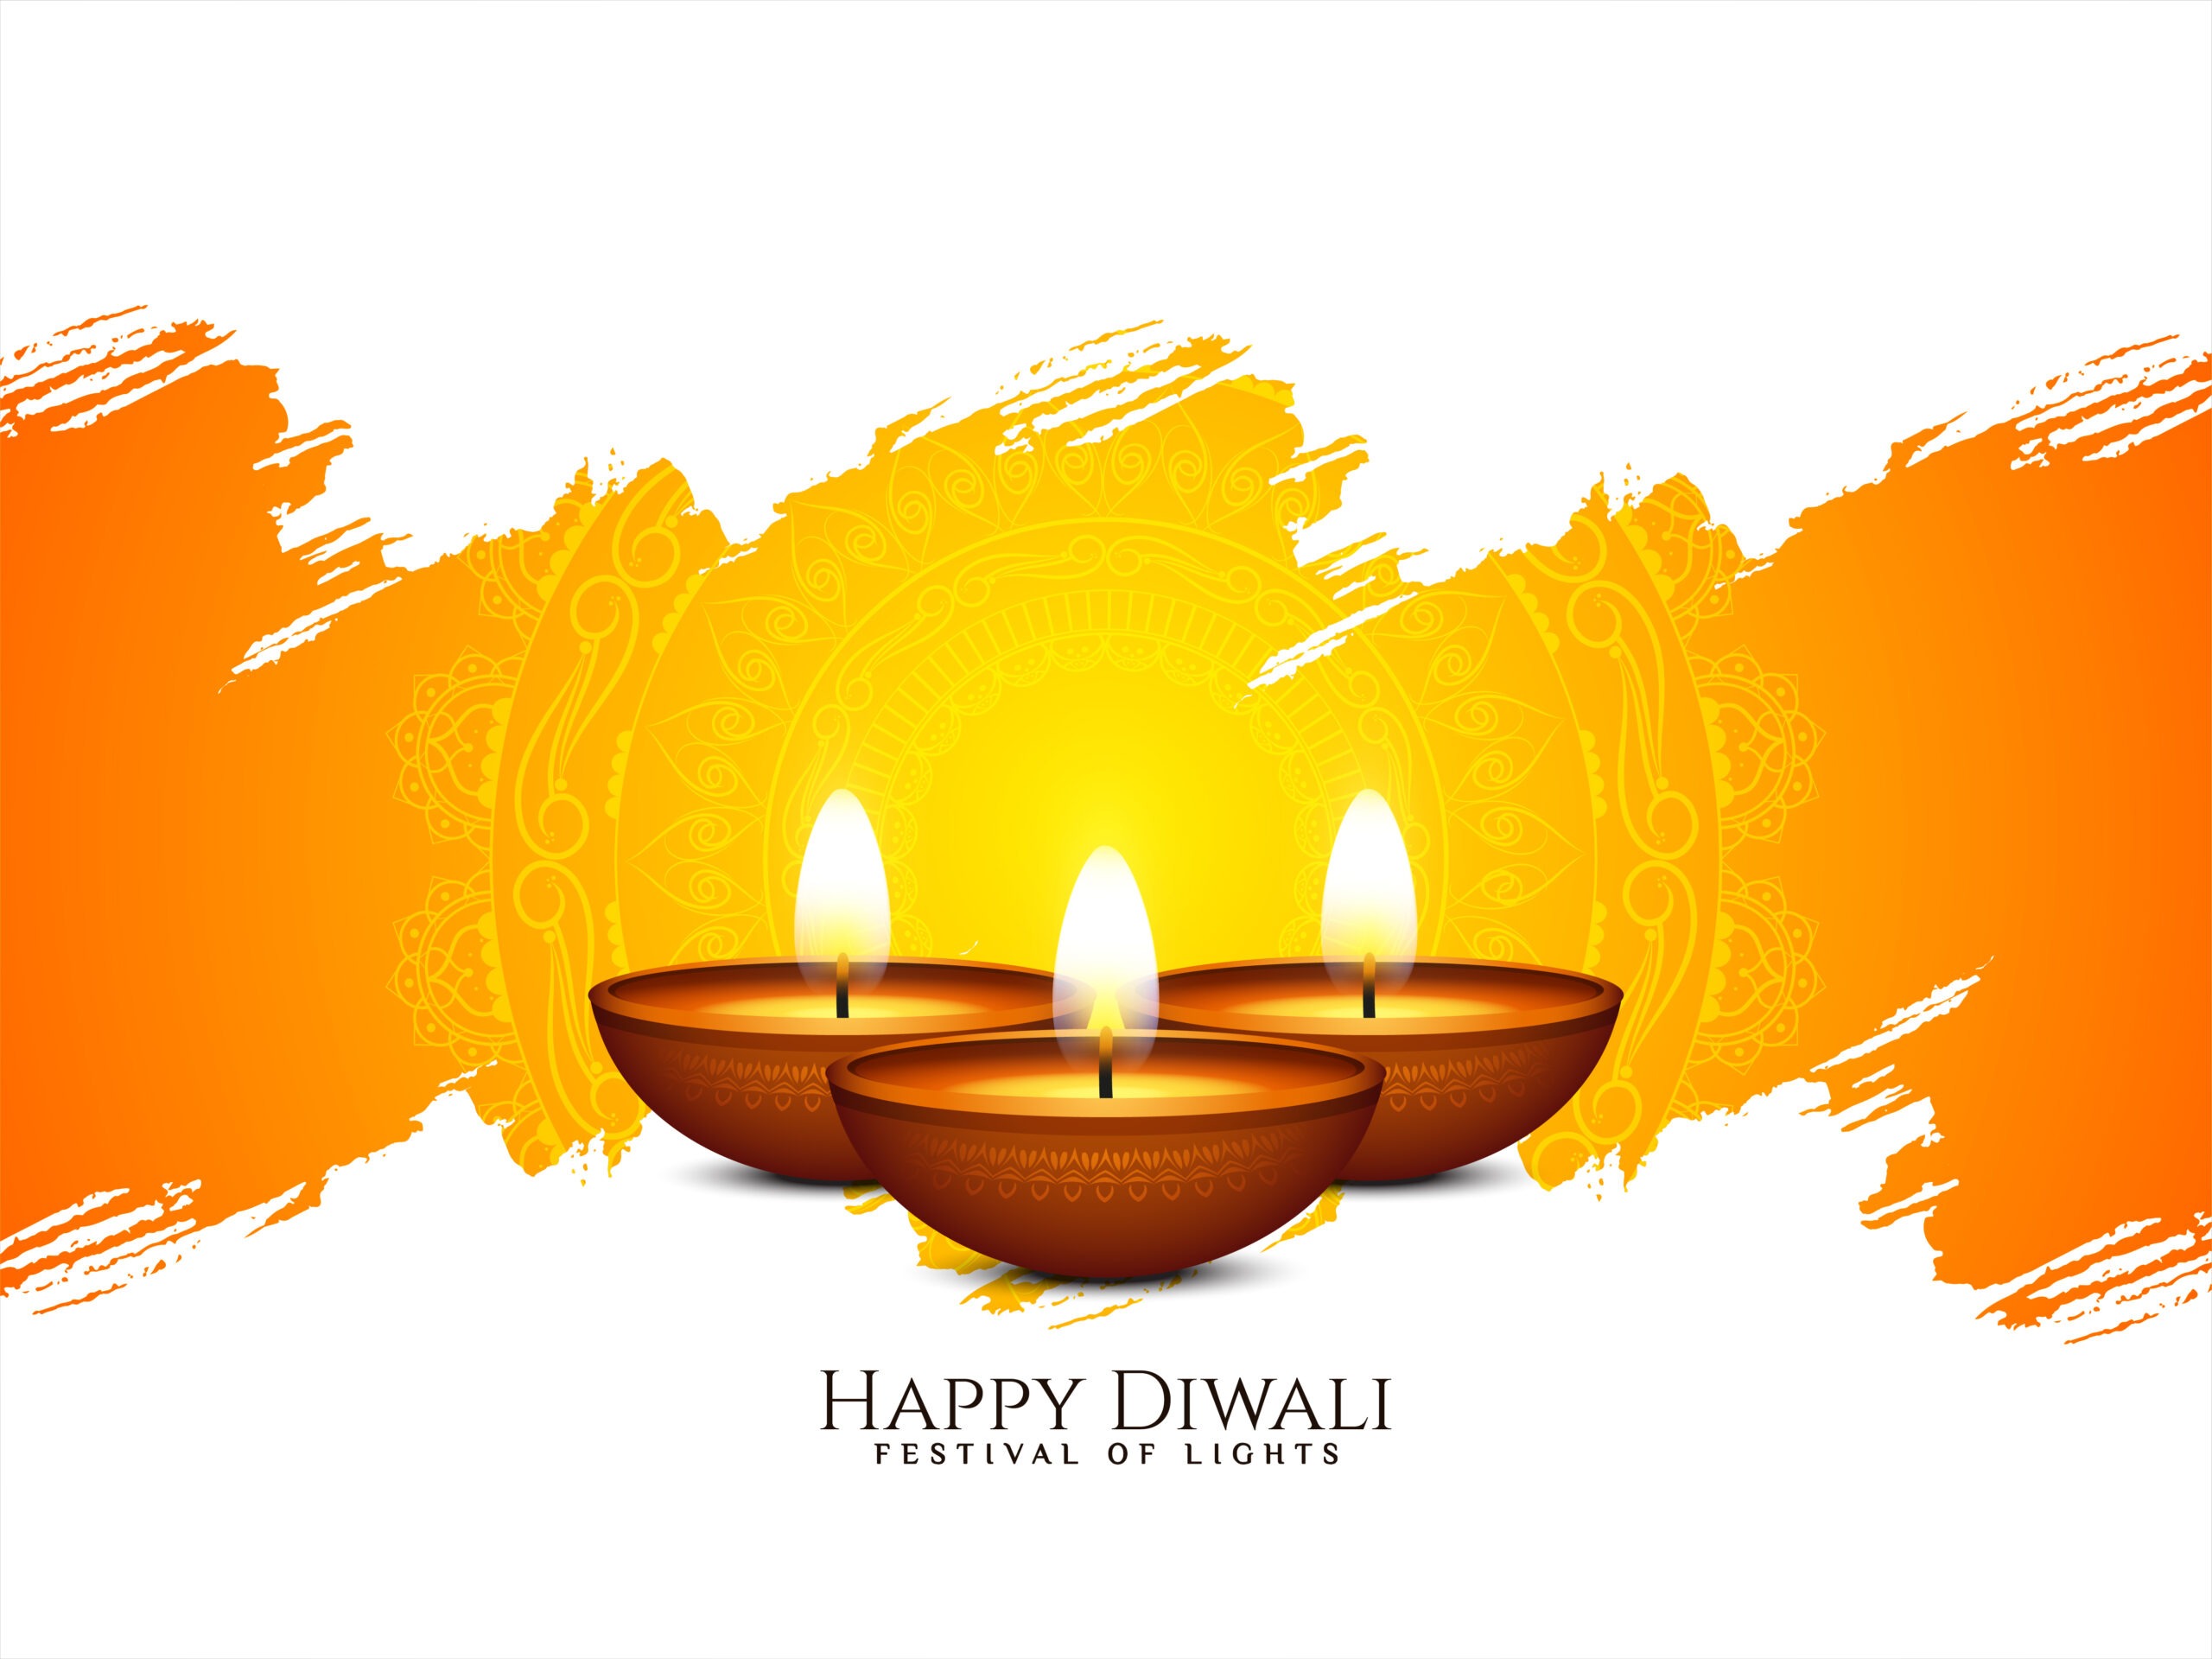 Happy Diwali 2021 Image & Photo Free Download